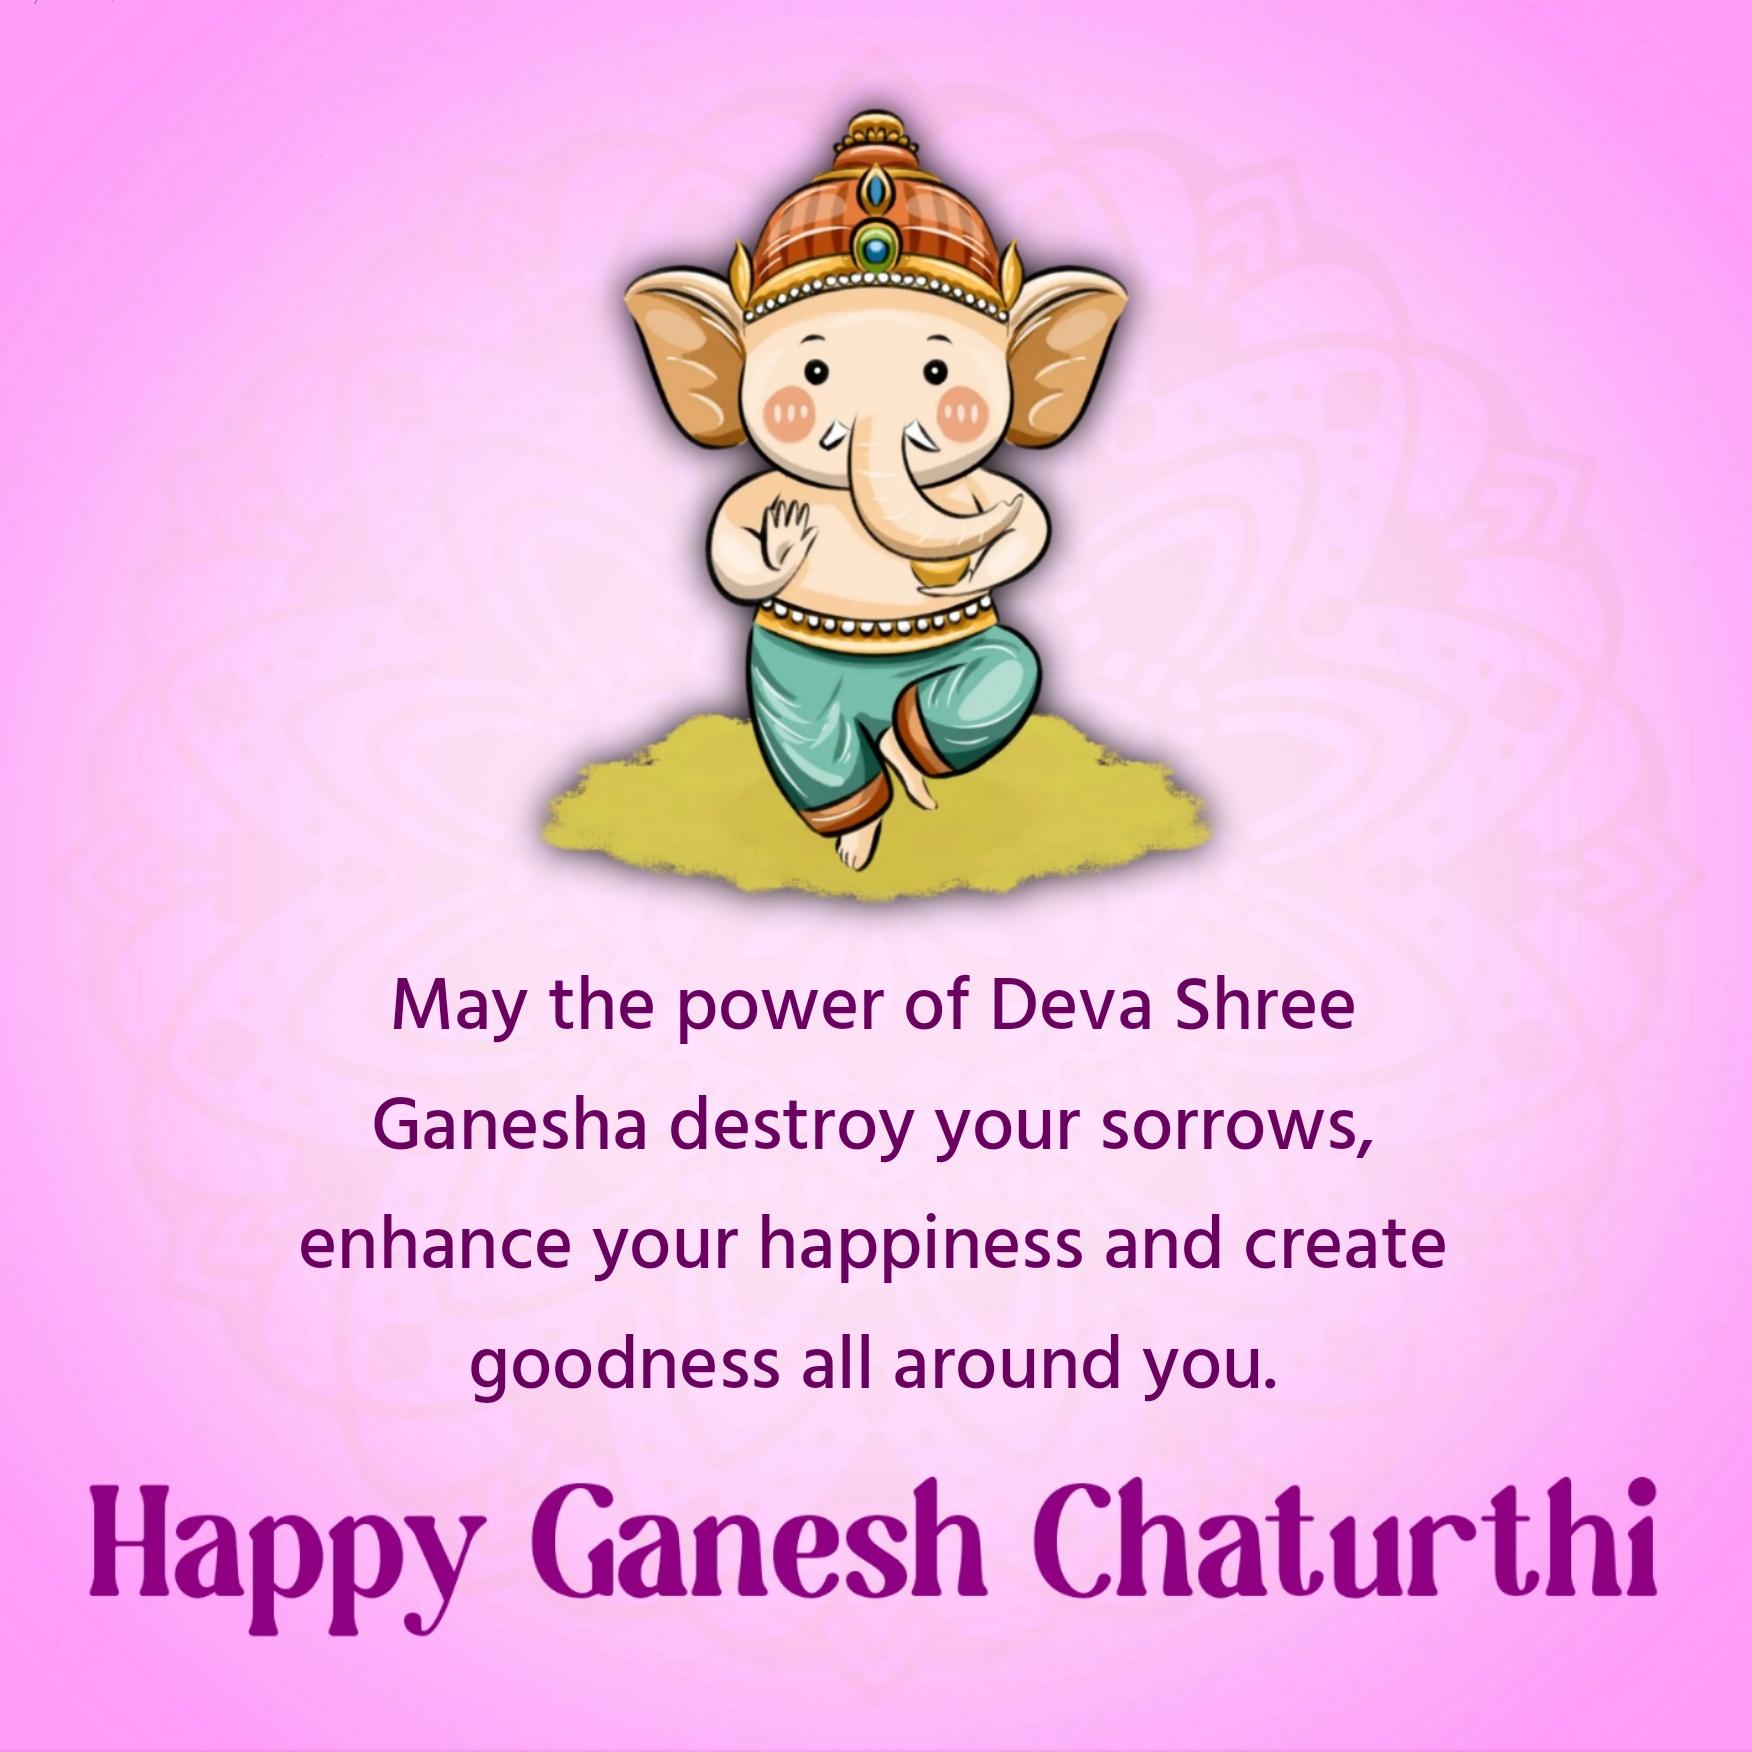 May the power of Deva Shree Ganesha destroy your sorrows